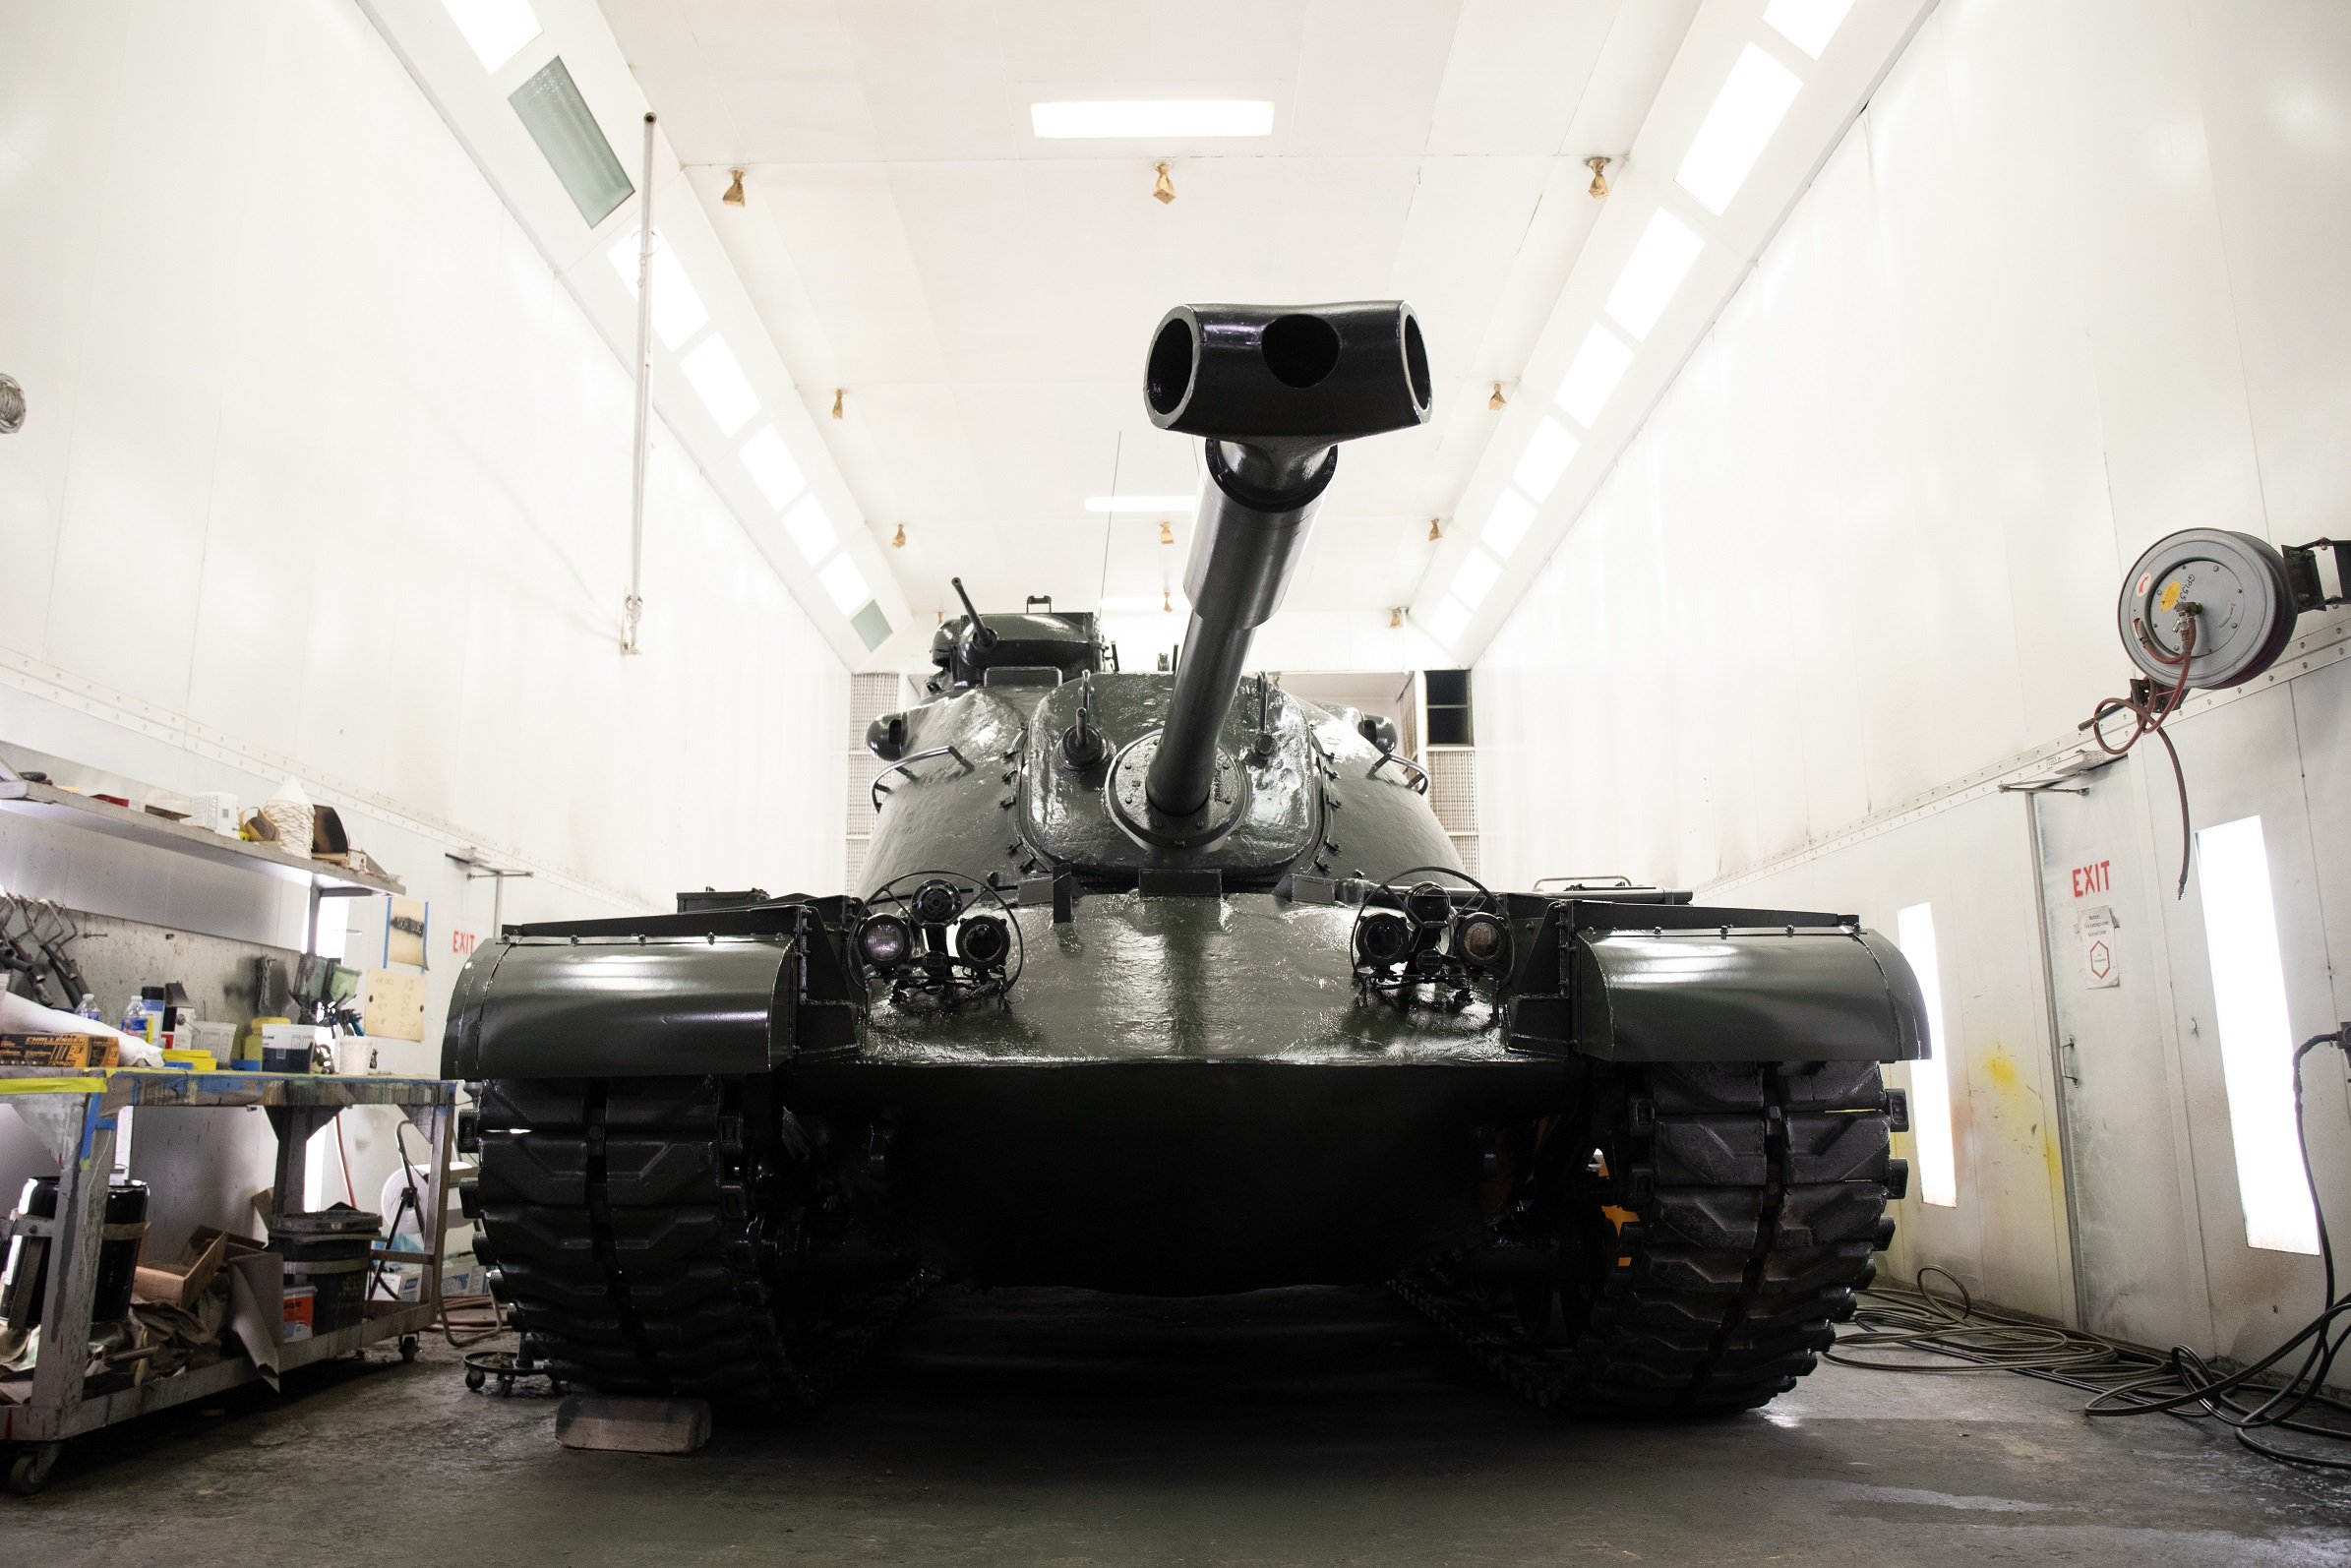 U.S. Army legendary tank gets a new paint job